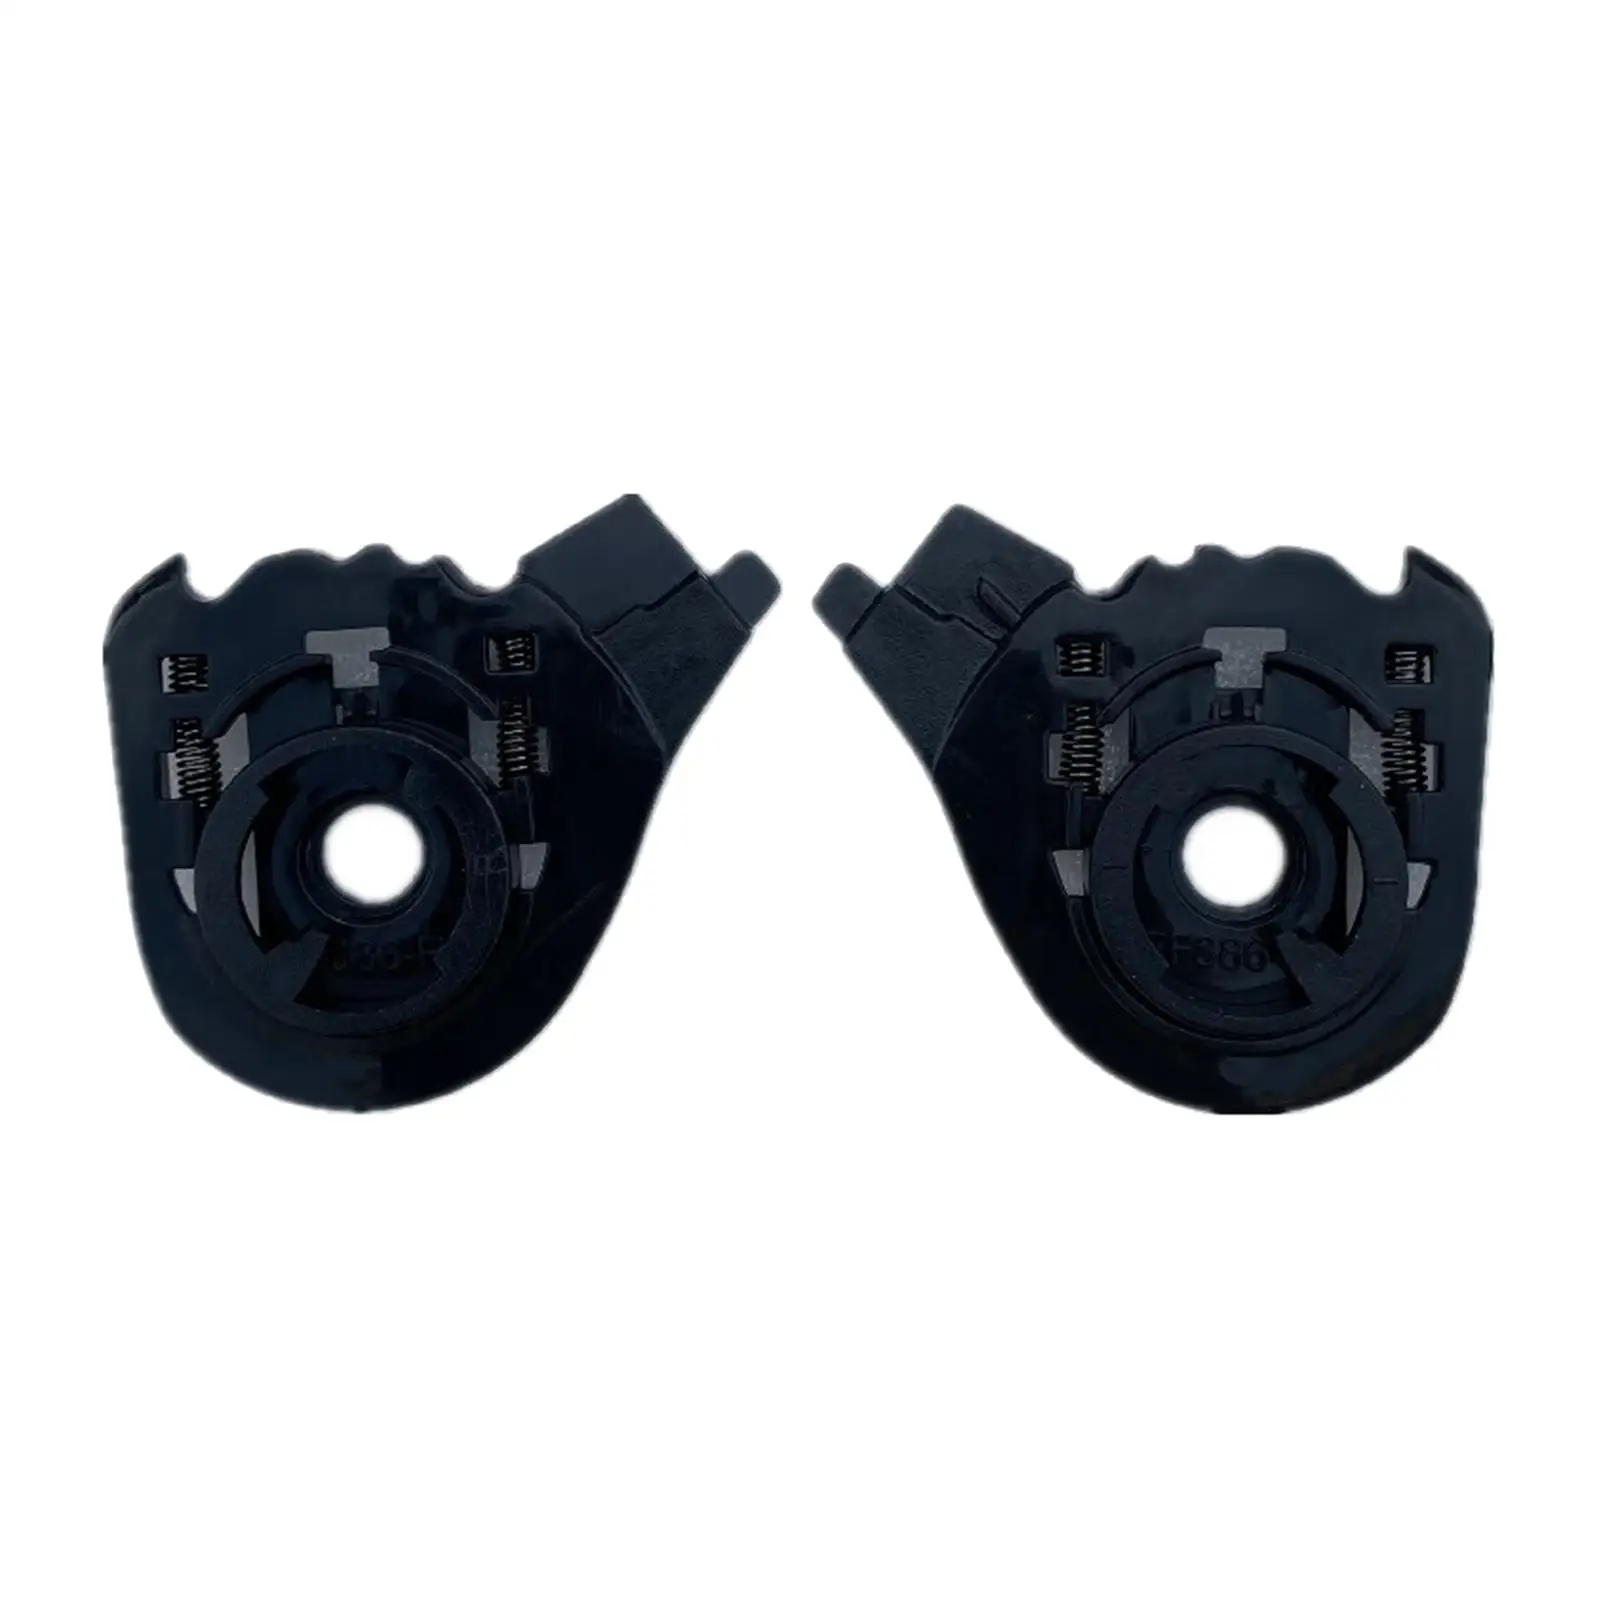 2x Motorcycles Helmet Lens Base Replacement Helmets Visor Mounts Fit for Ff386 394